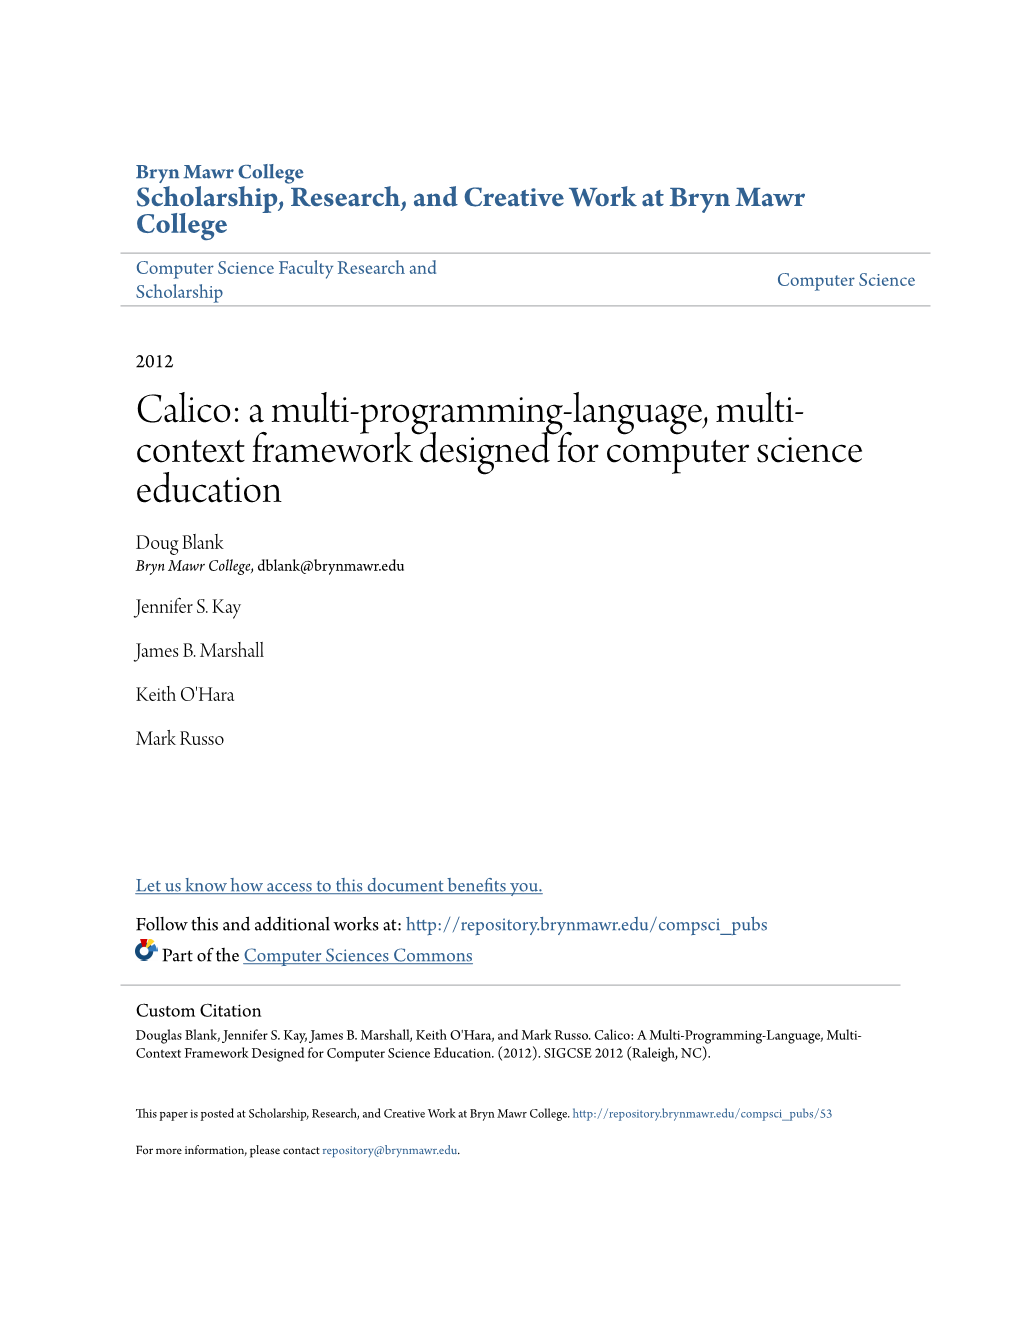 A Multi-Programming-Language, Multi-Context Framework Designed for Computer Science Education Douglas Blank1, Jennifer S